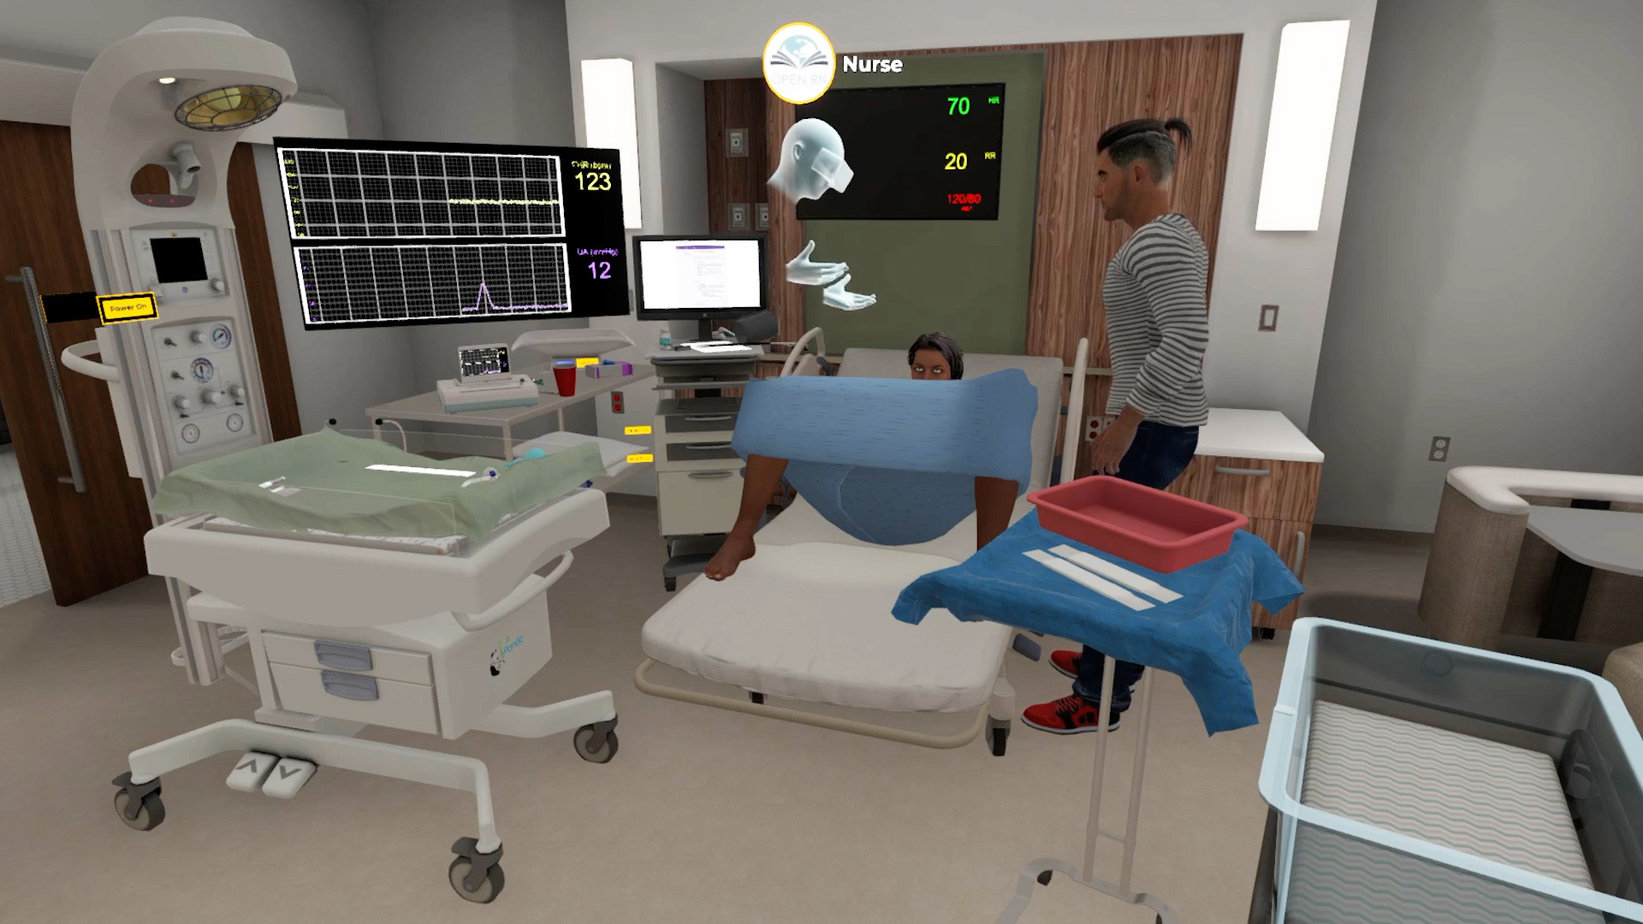 VR nursing birthing simulation